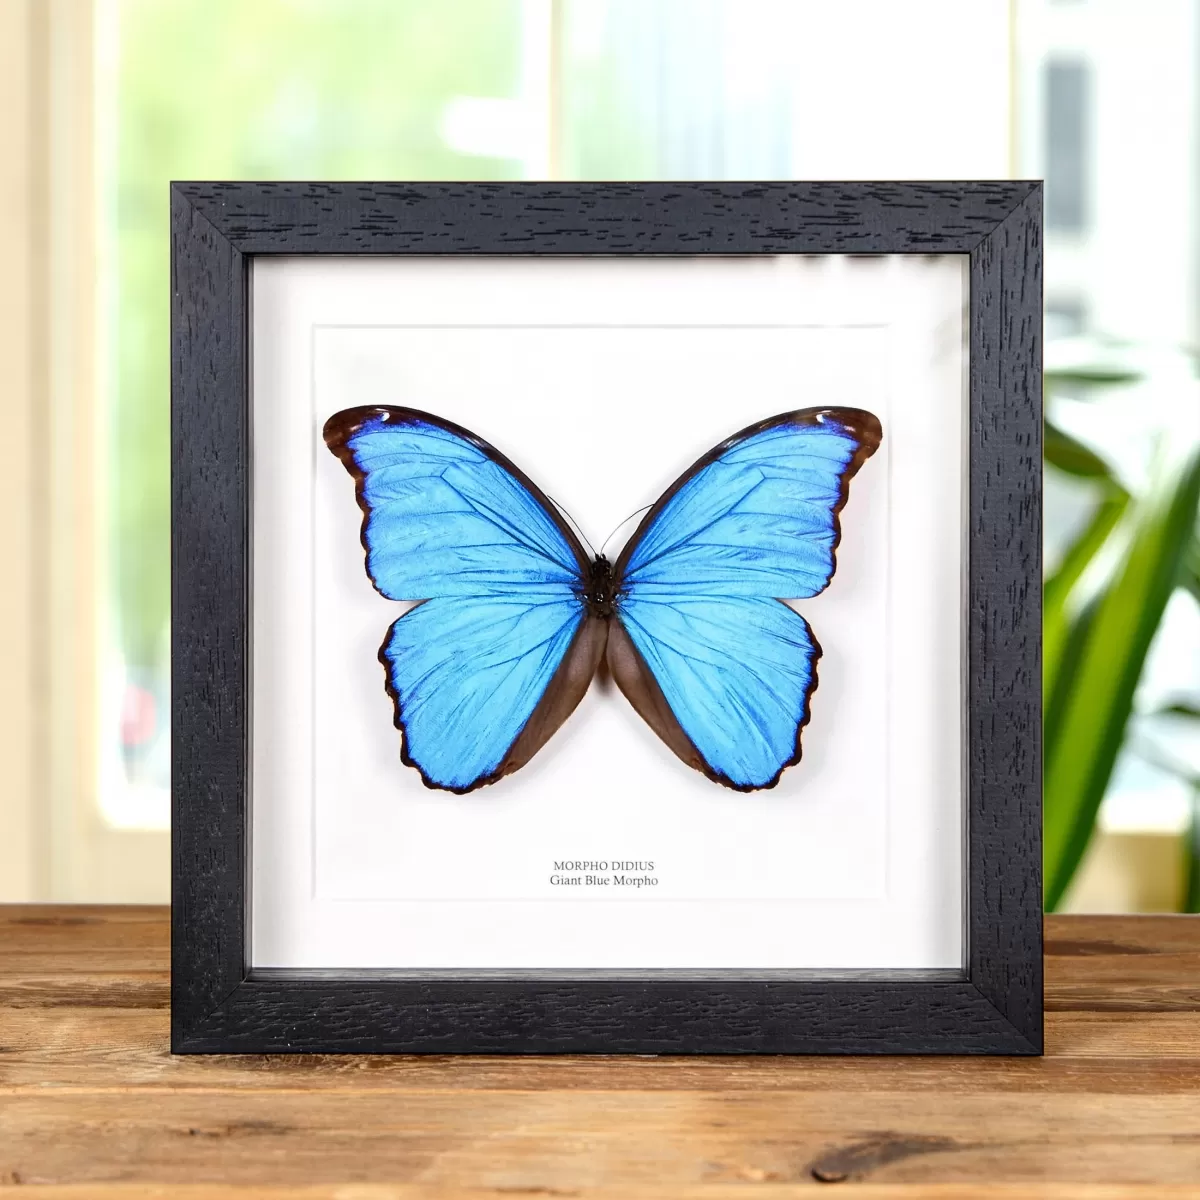 Minibeast Blue Morpho Butterfly  in 8 x 8 Inch Box Frame (Morpho didius)